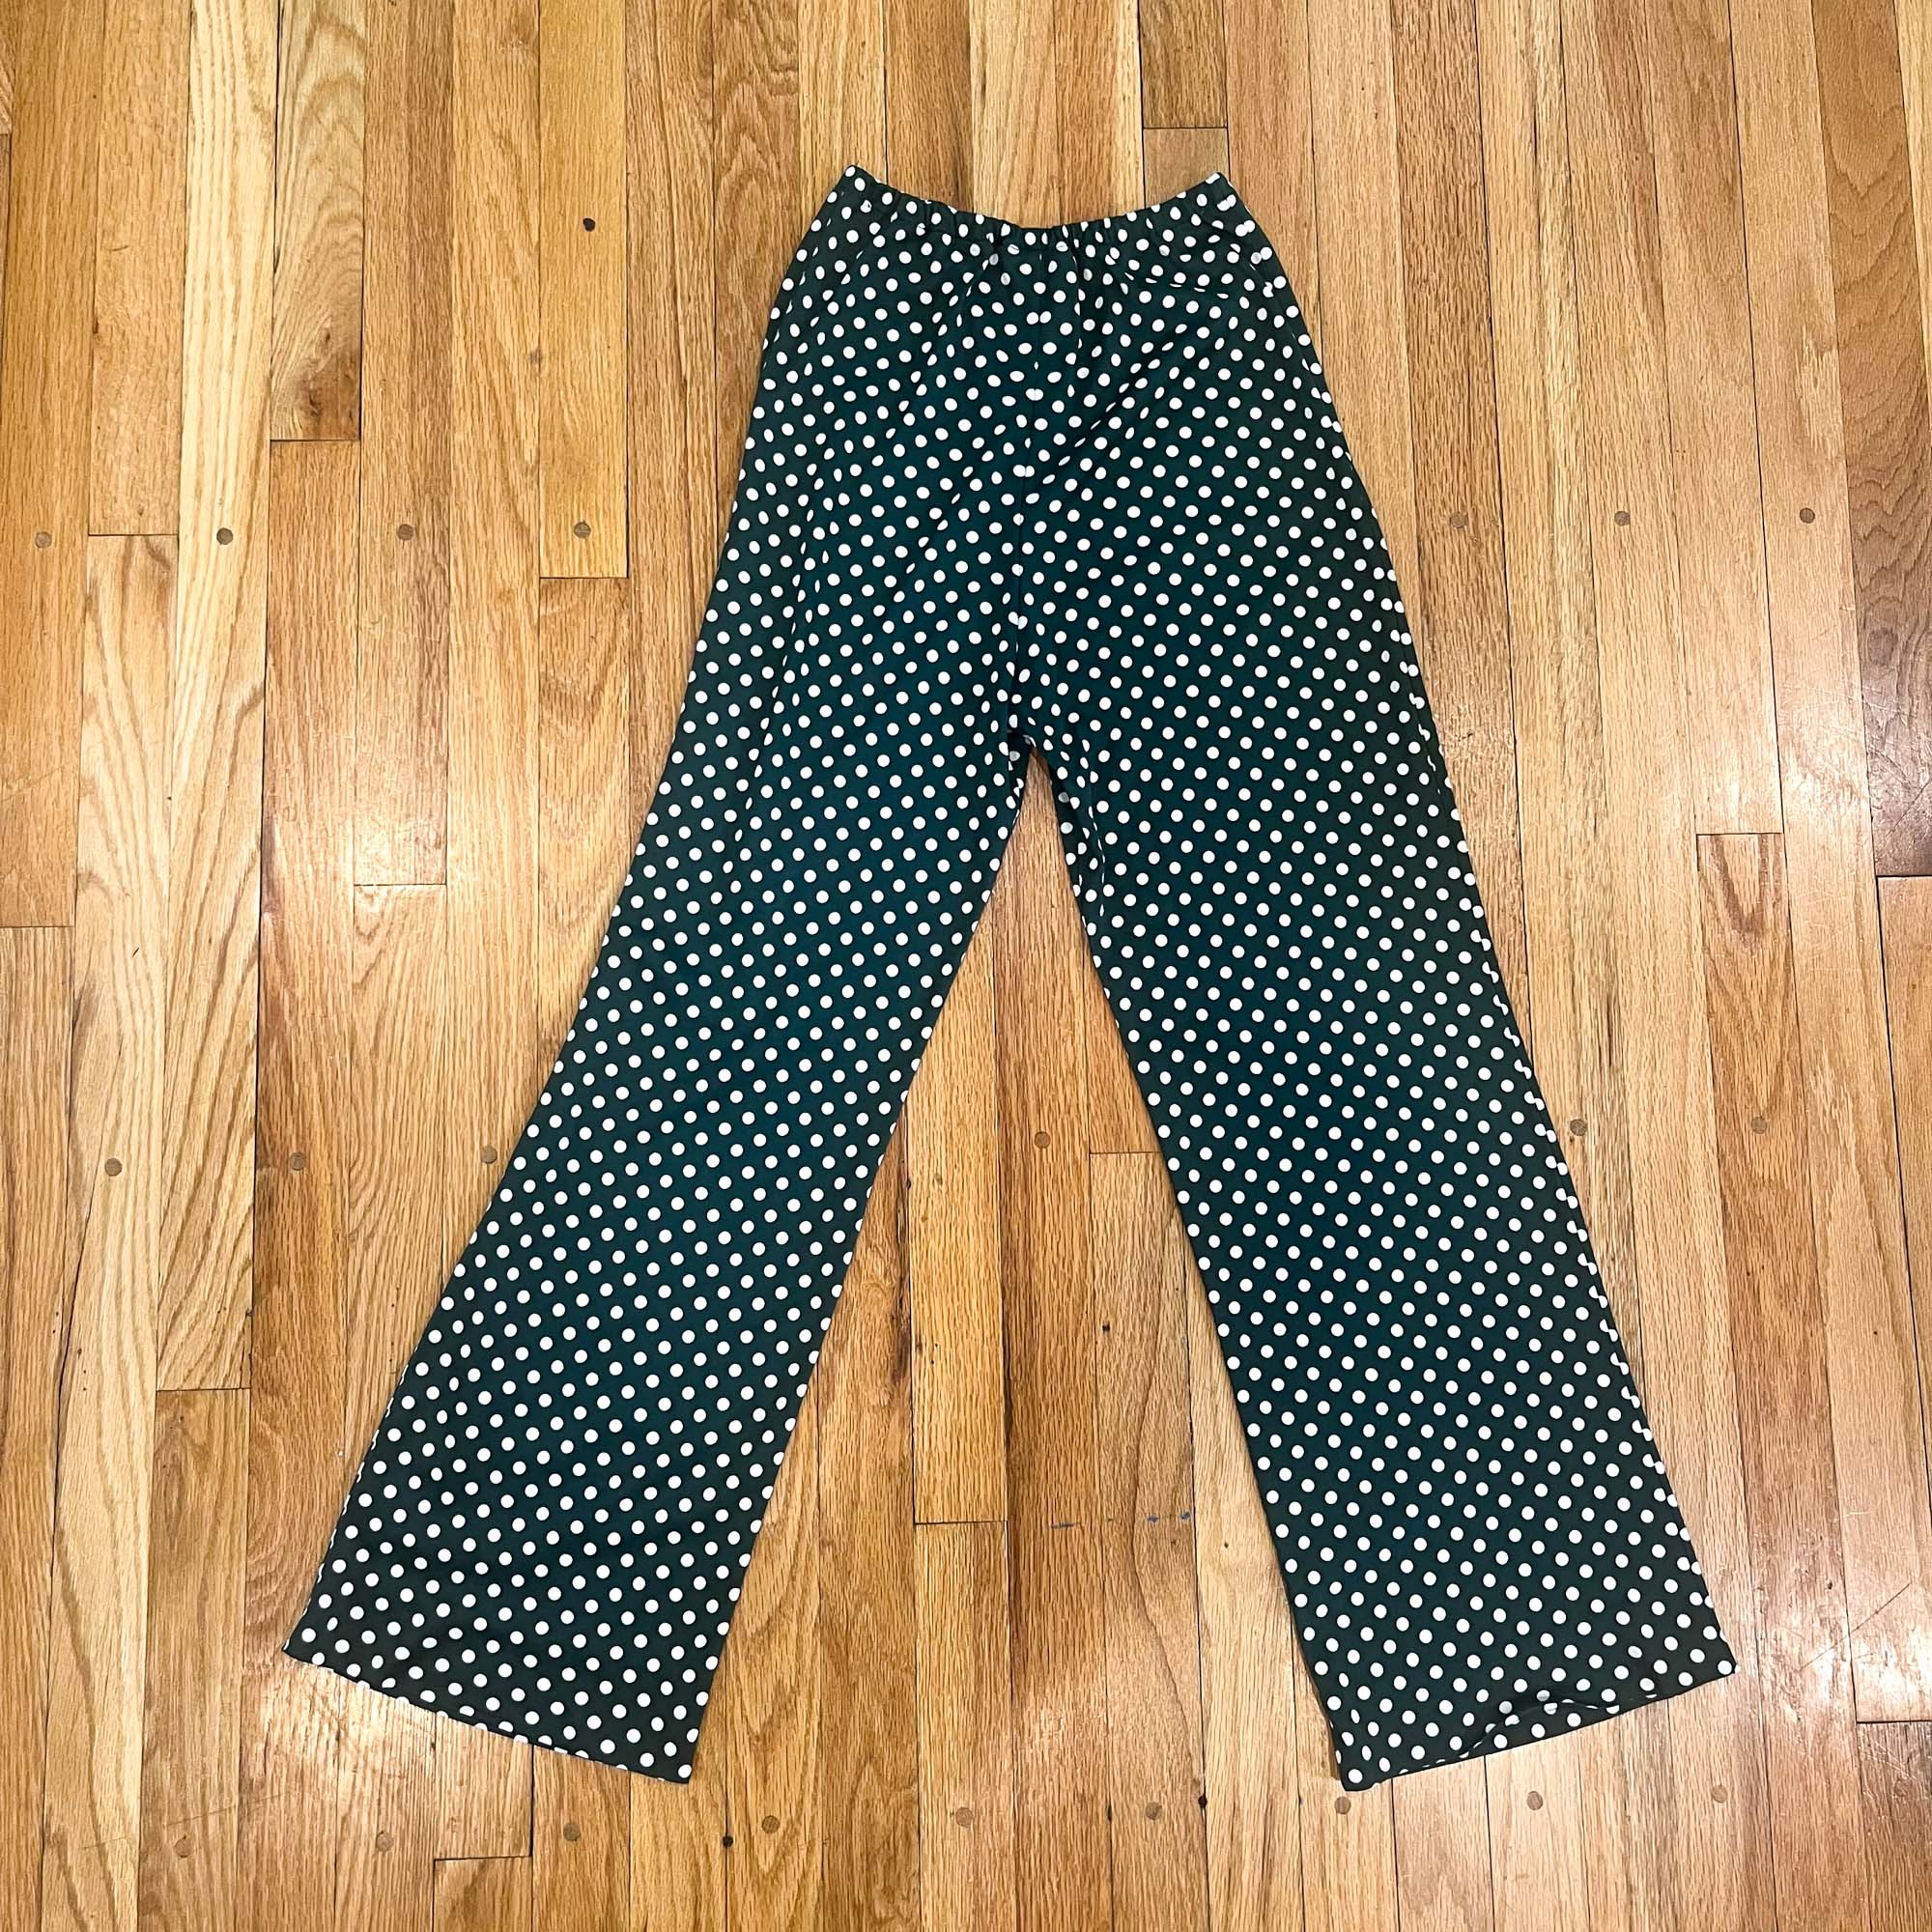 vintage green and white polka dot pants